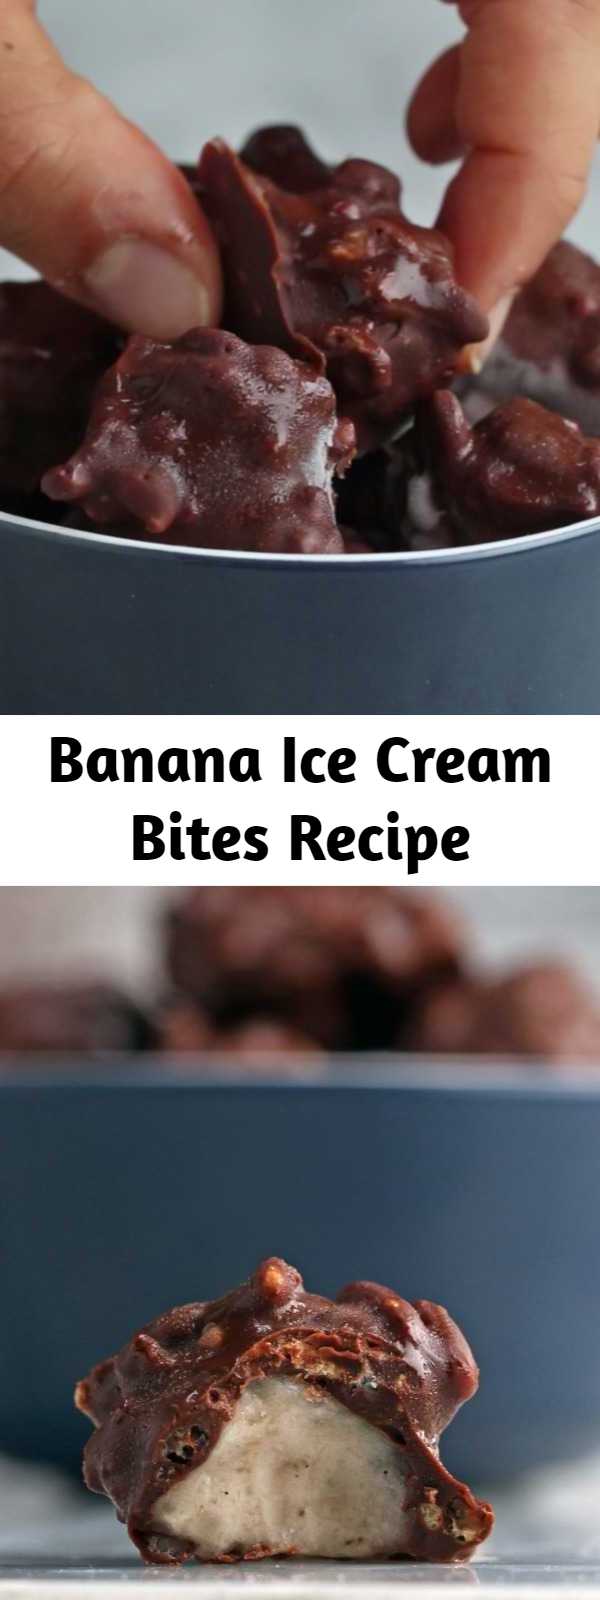 Banana Ice Cream Bites Recipe - These Banana "Ice Cream" Bites are a healthier option to satisfy your sweet tooth.